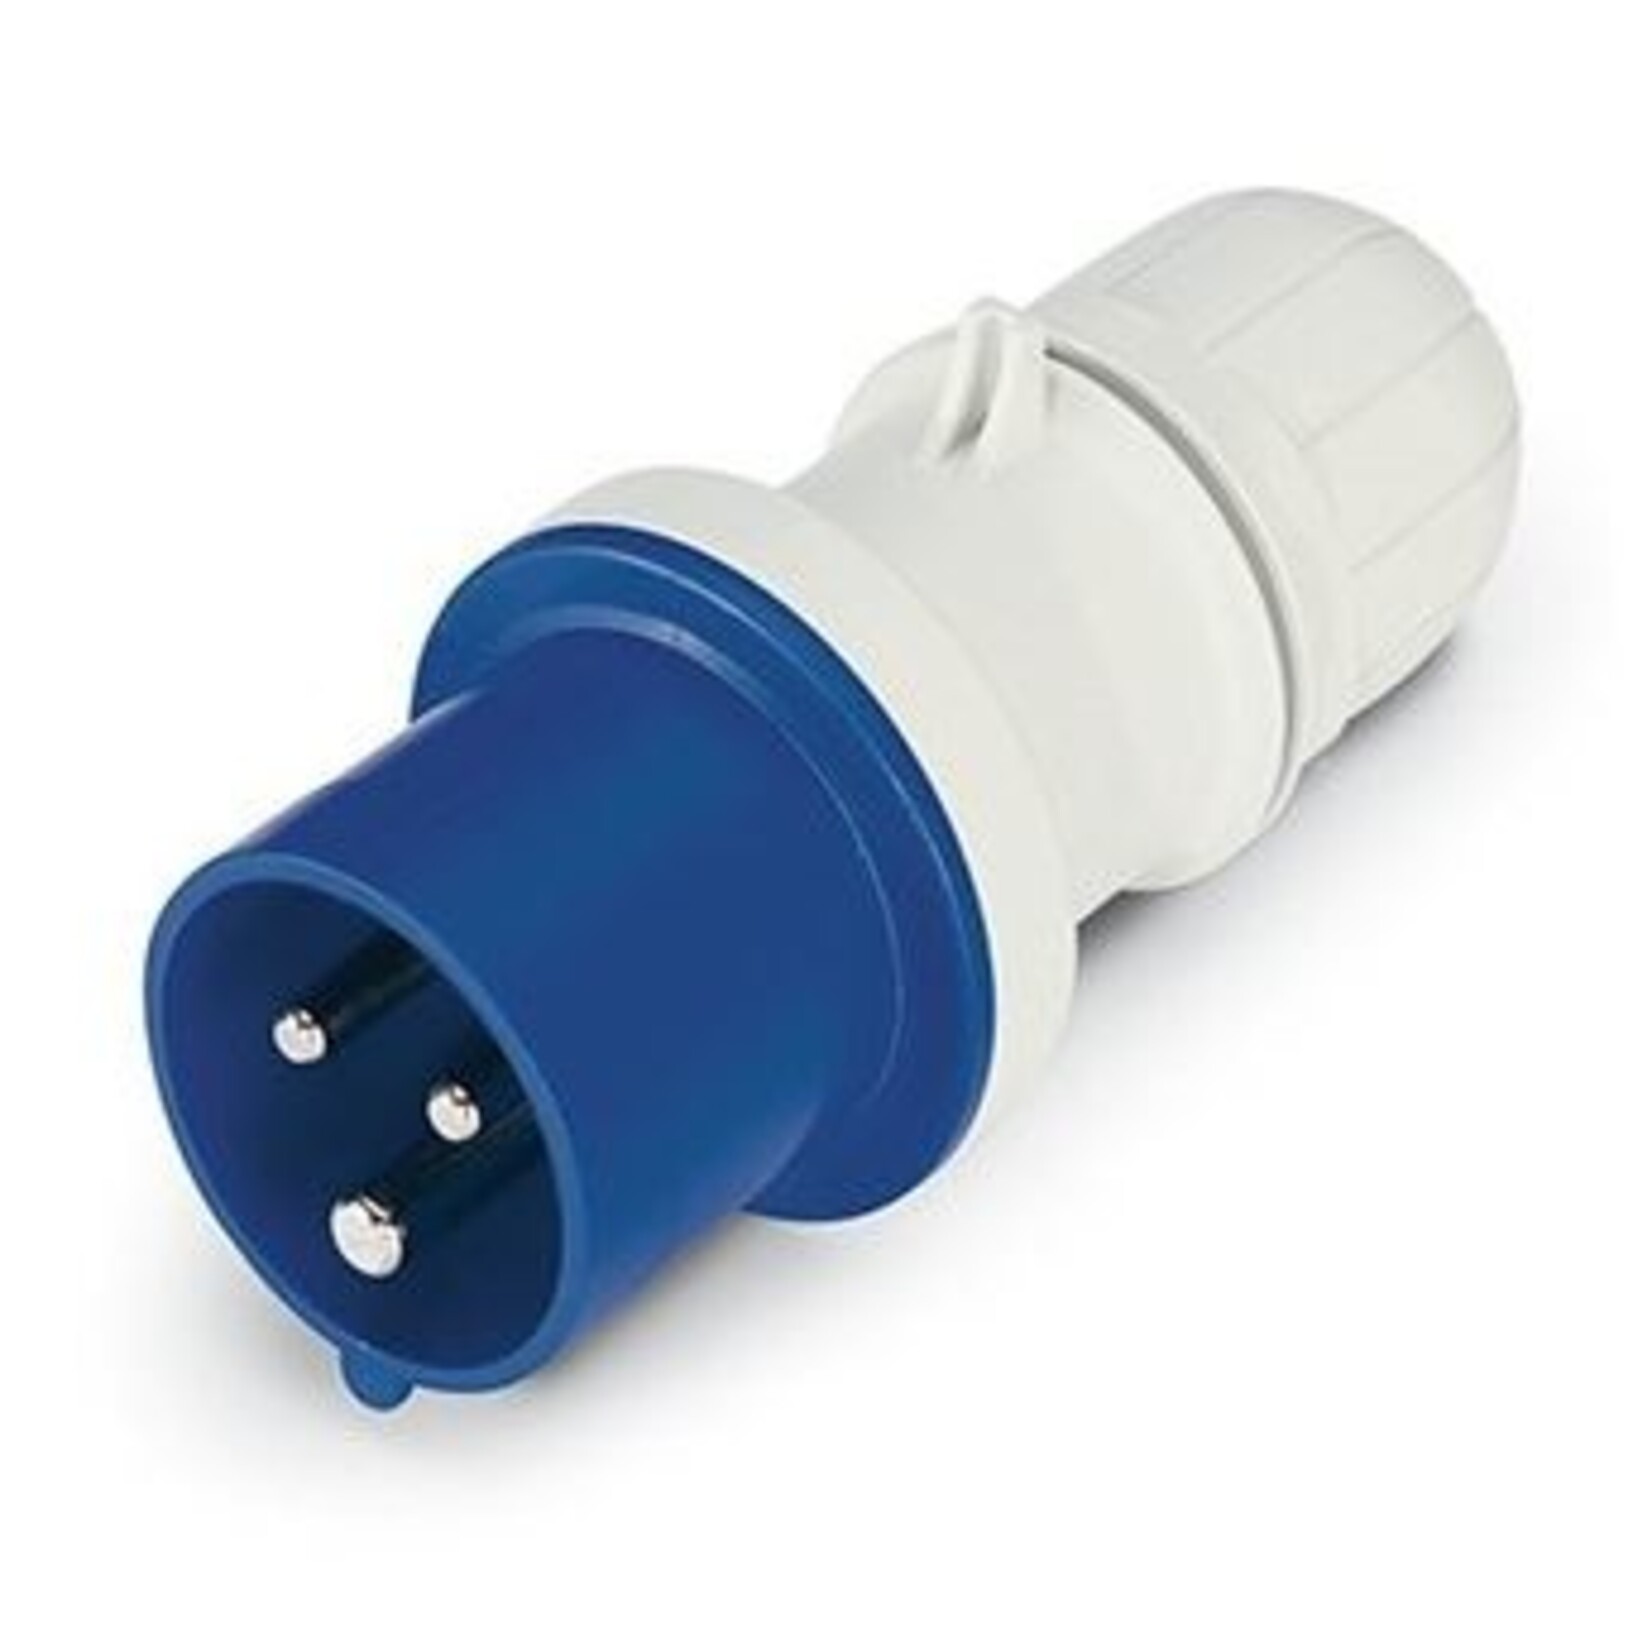 Plastimo Blue plug 16a 2+t 220v ip44